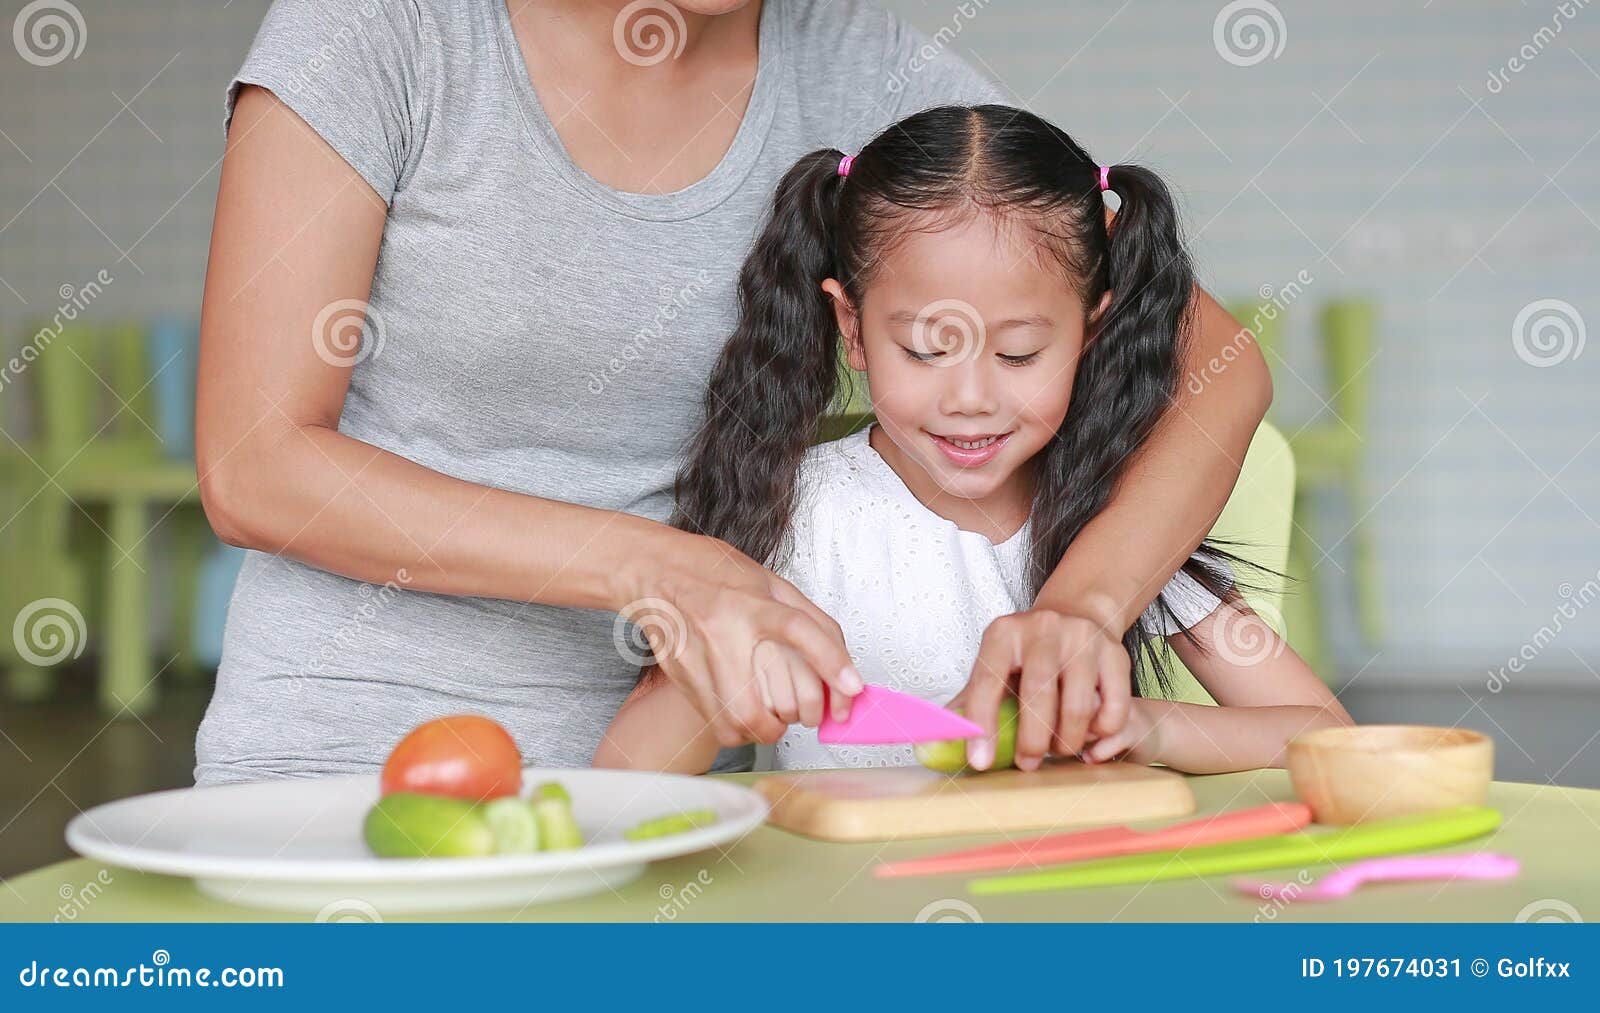 asian mom teaches daughter